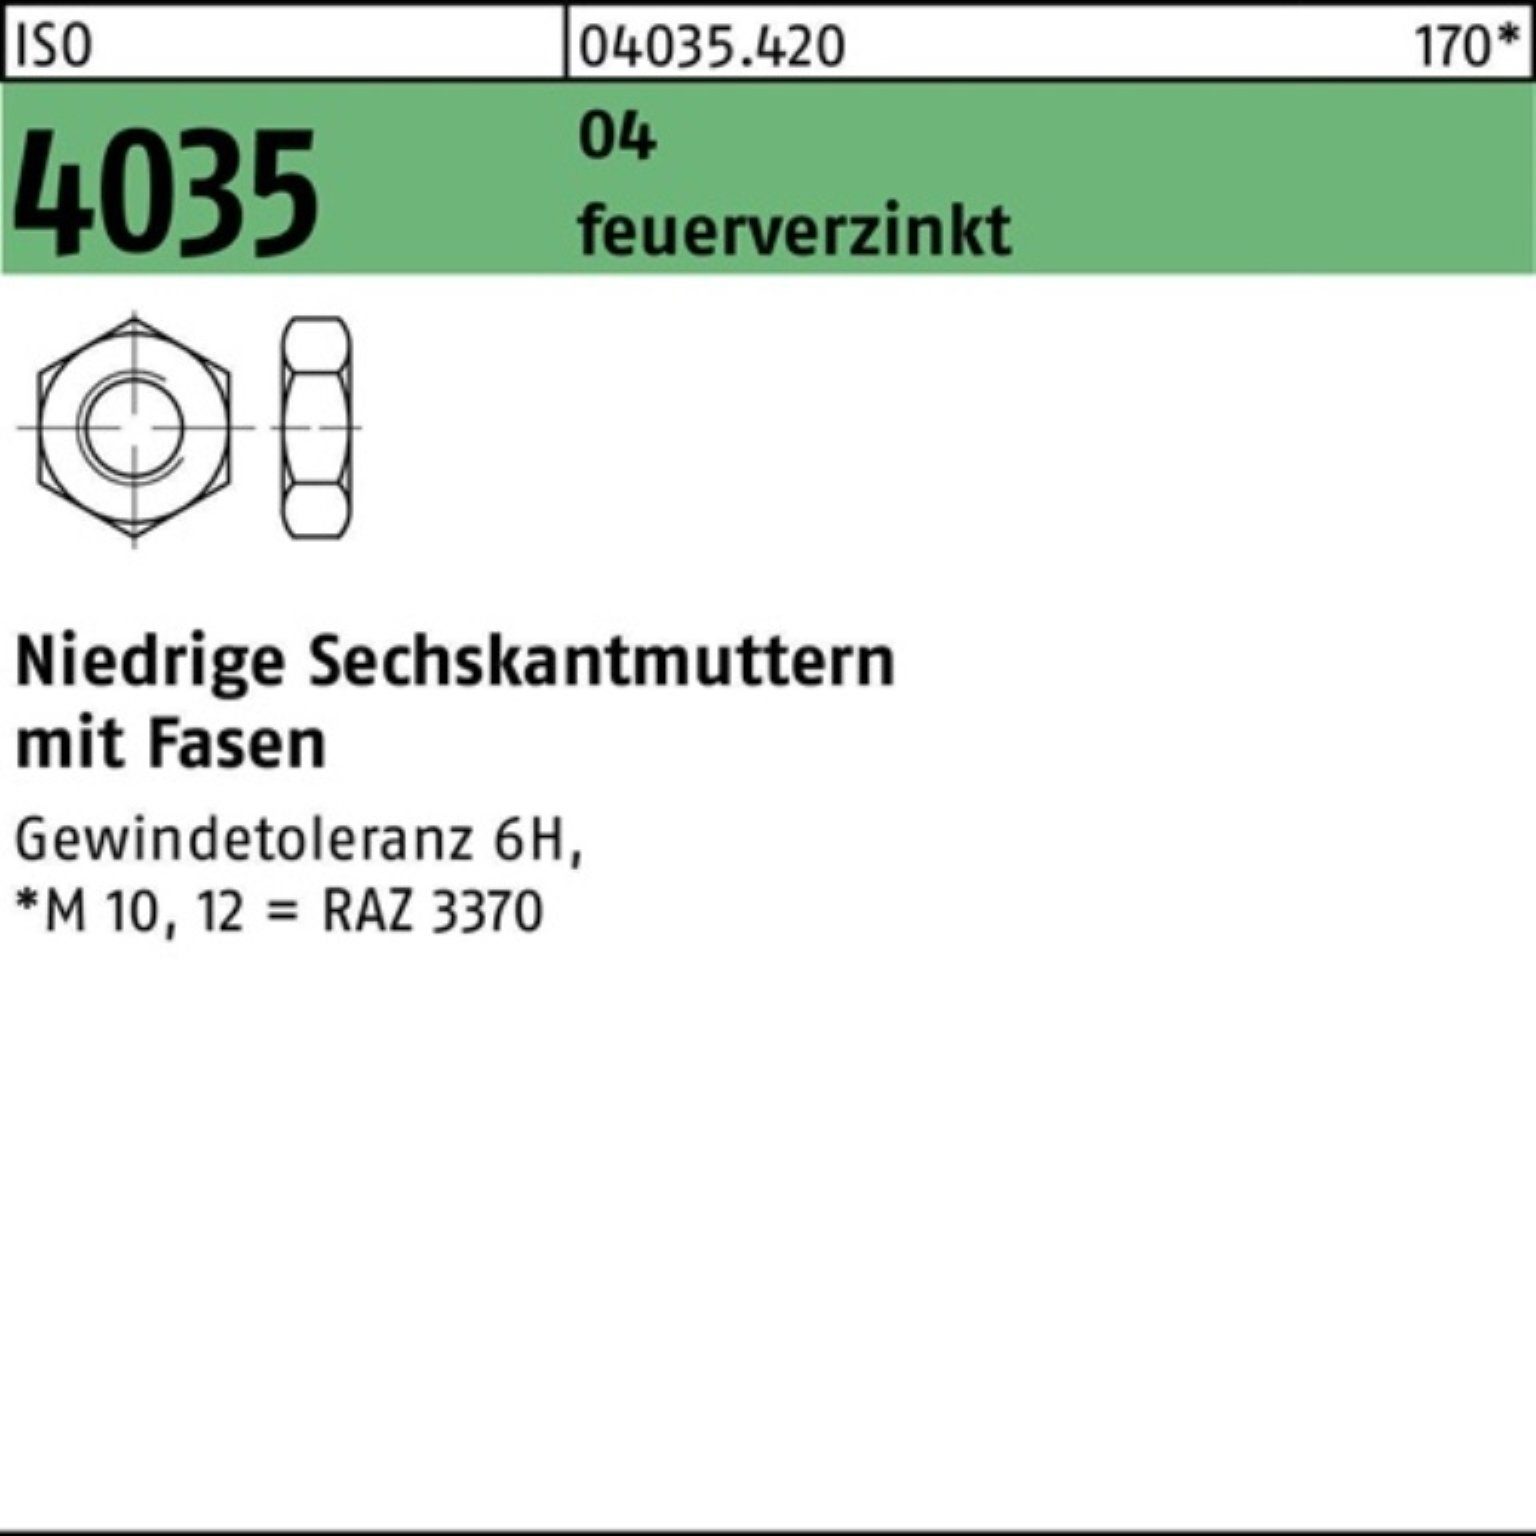 Muttern ISO niedrig Automatenstahl Sechskantmutter Fasen f Pack M12 100er 4035 Reyher